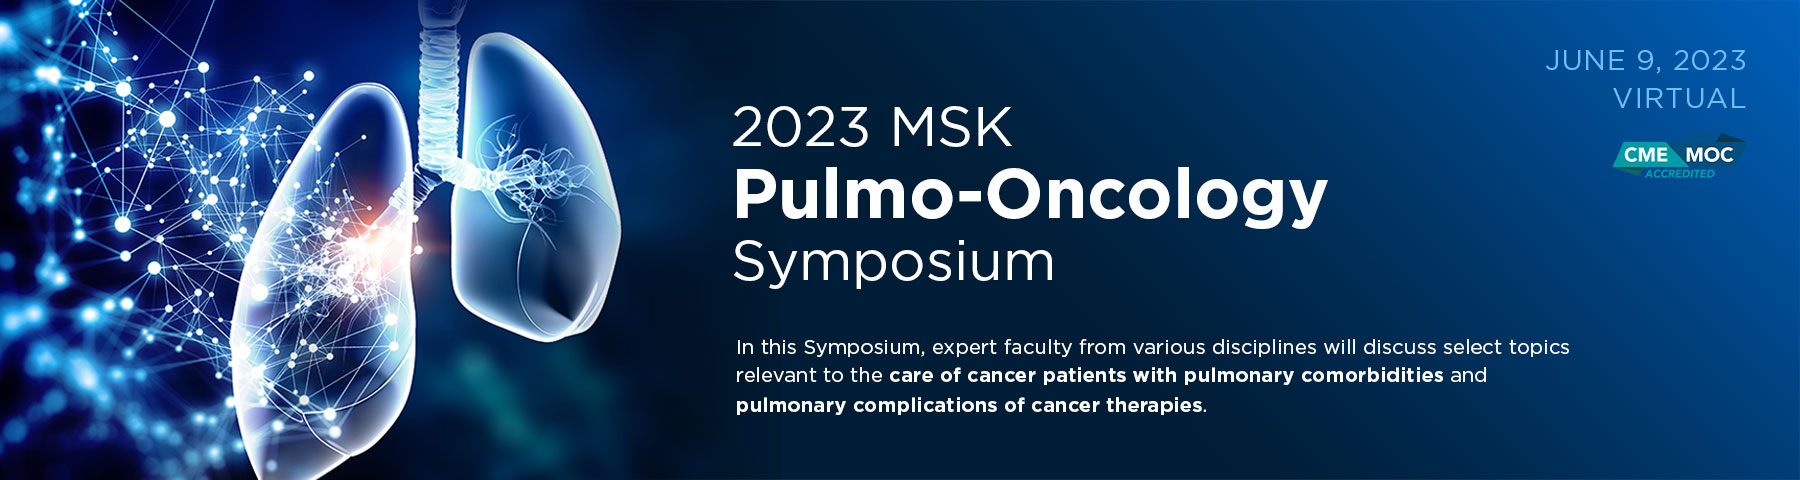 2023 MSK Pulmo-Oncology Symposium